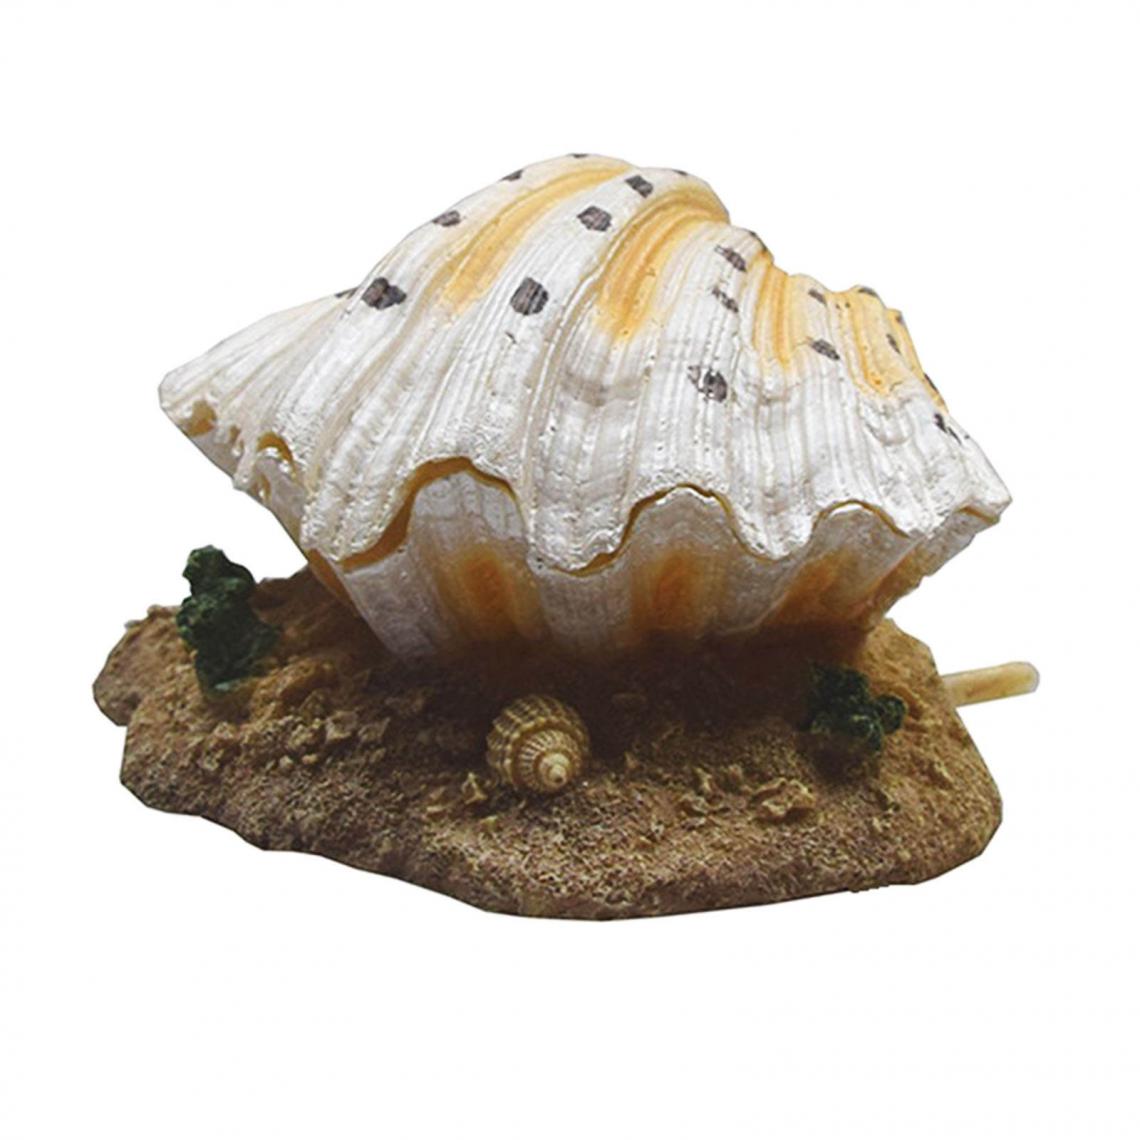 marque generique - Aquarium shell perle décoration ornement - Décoration aquarium